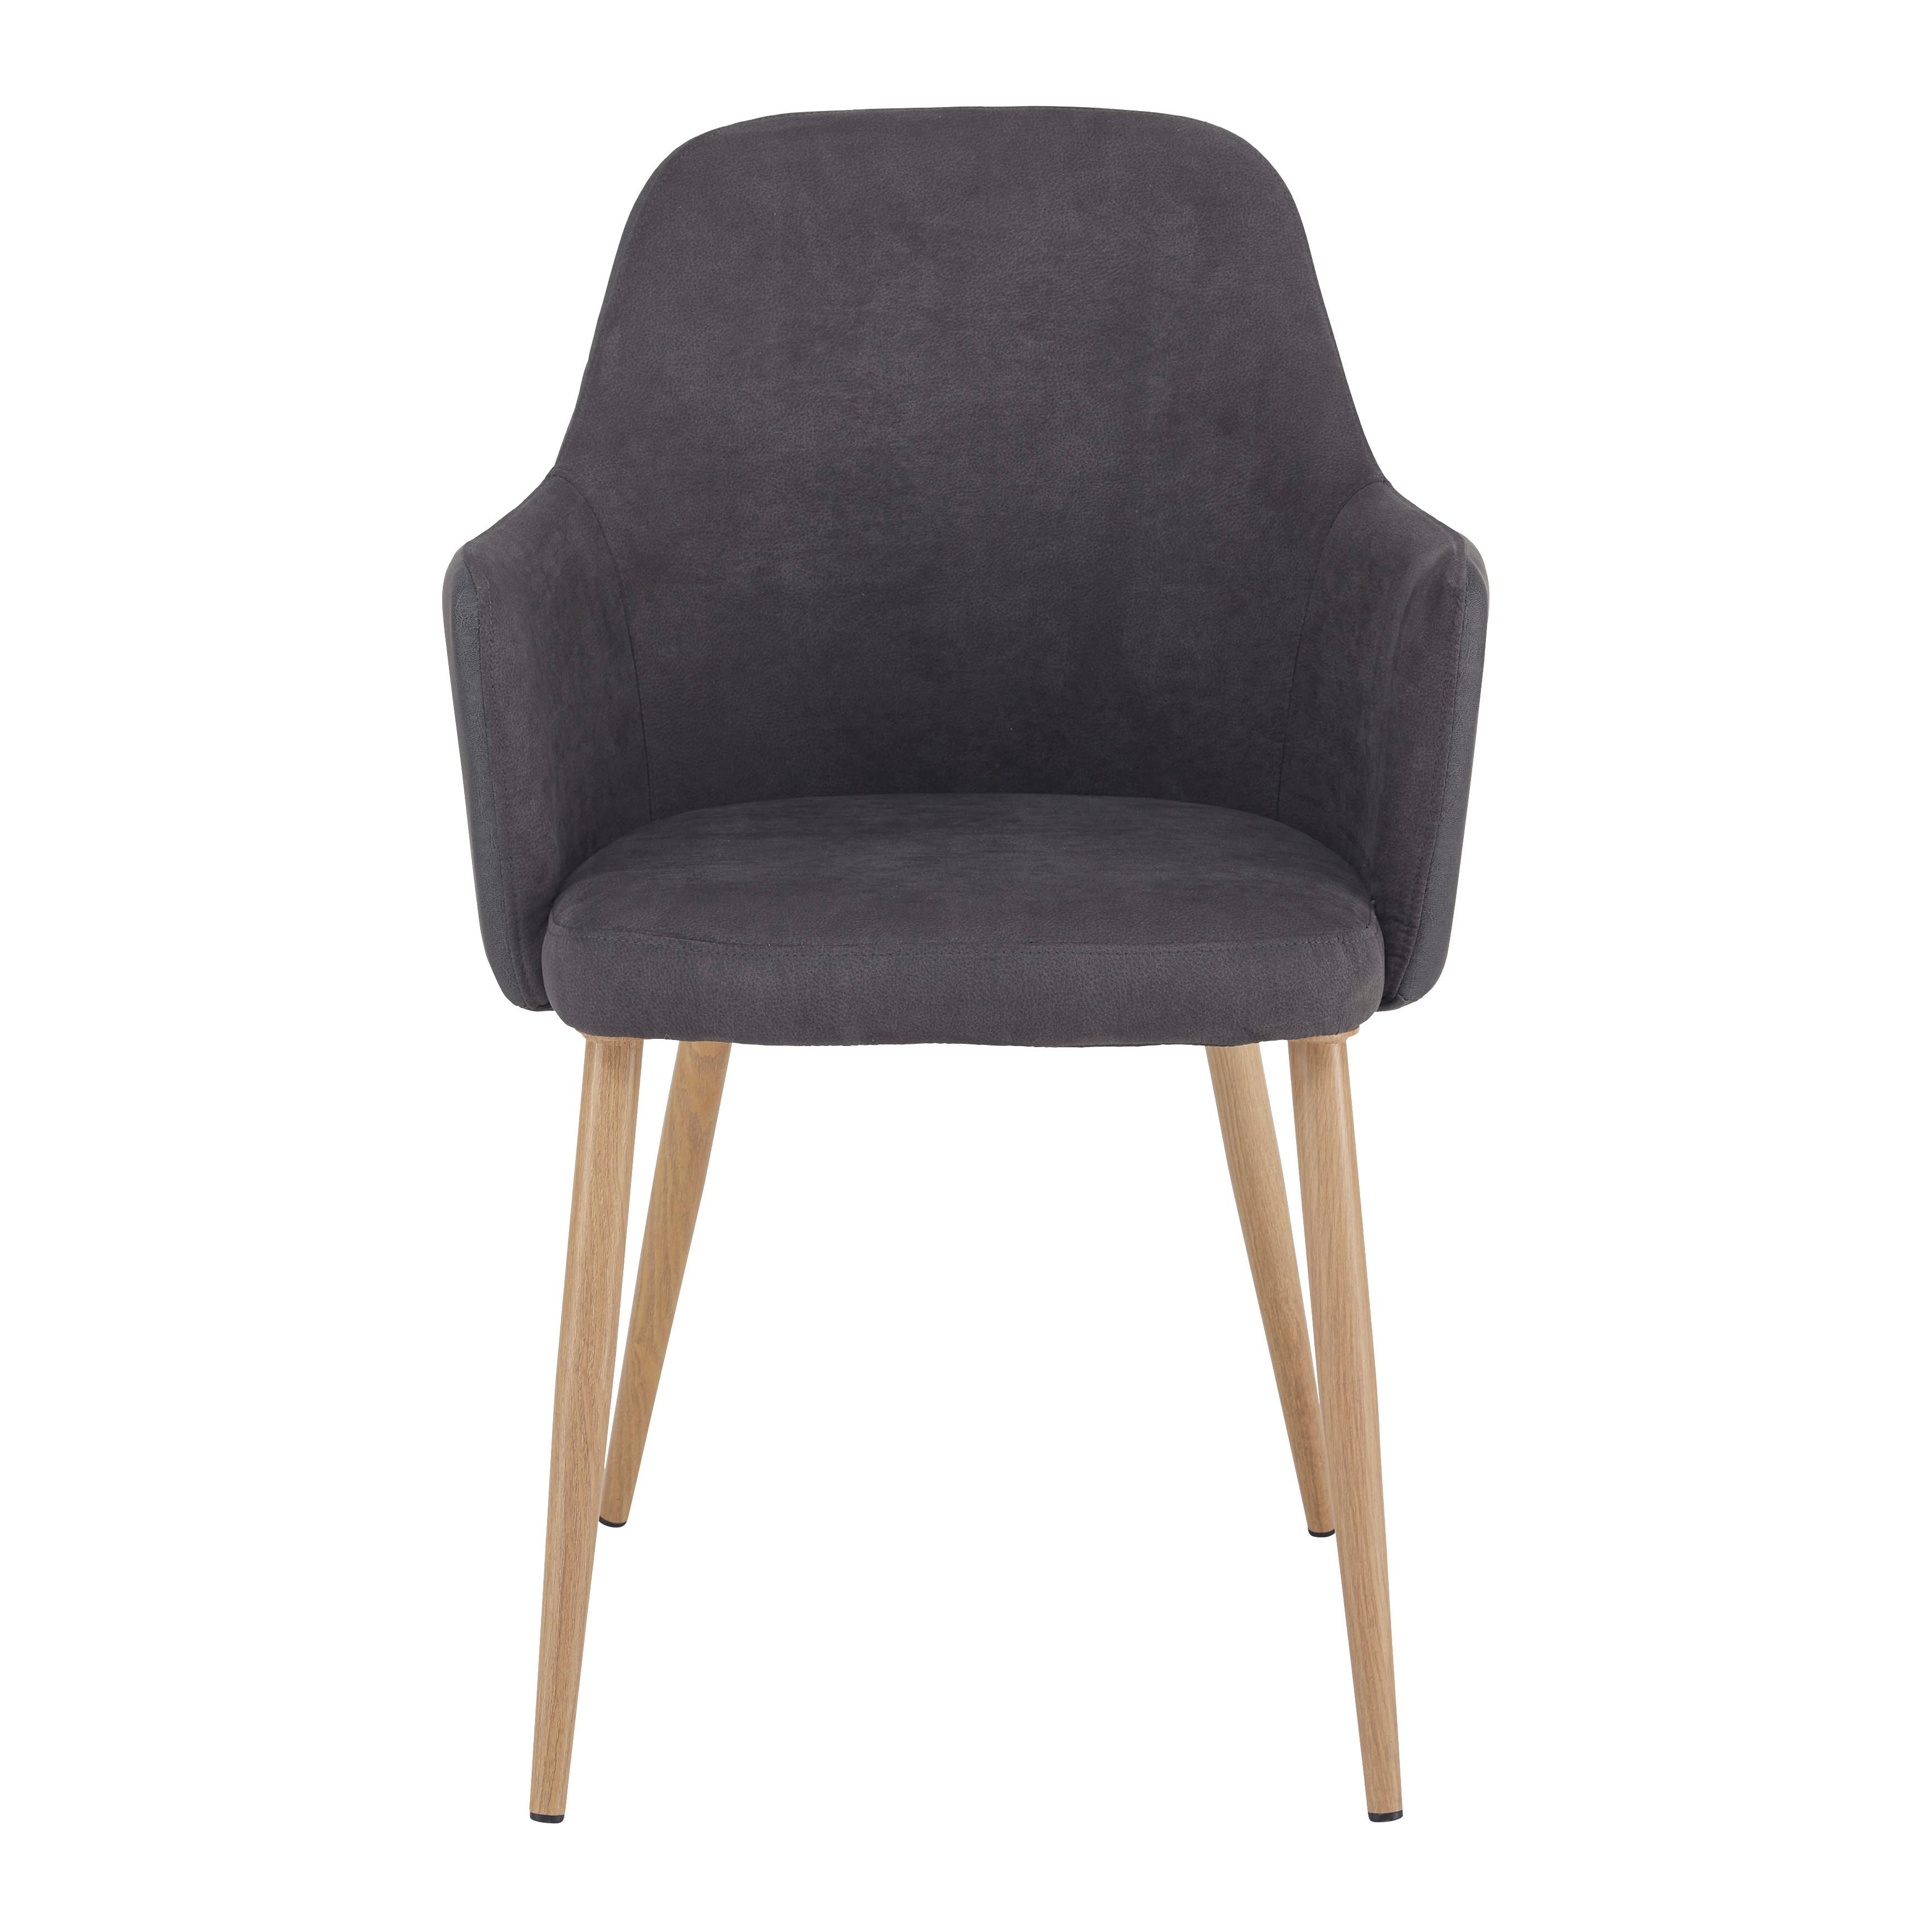 Židle Chrisi - šedá/barvy buku, Moderní, kov/dřevo (58/86/58cm) - Modern Living